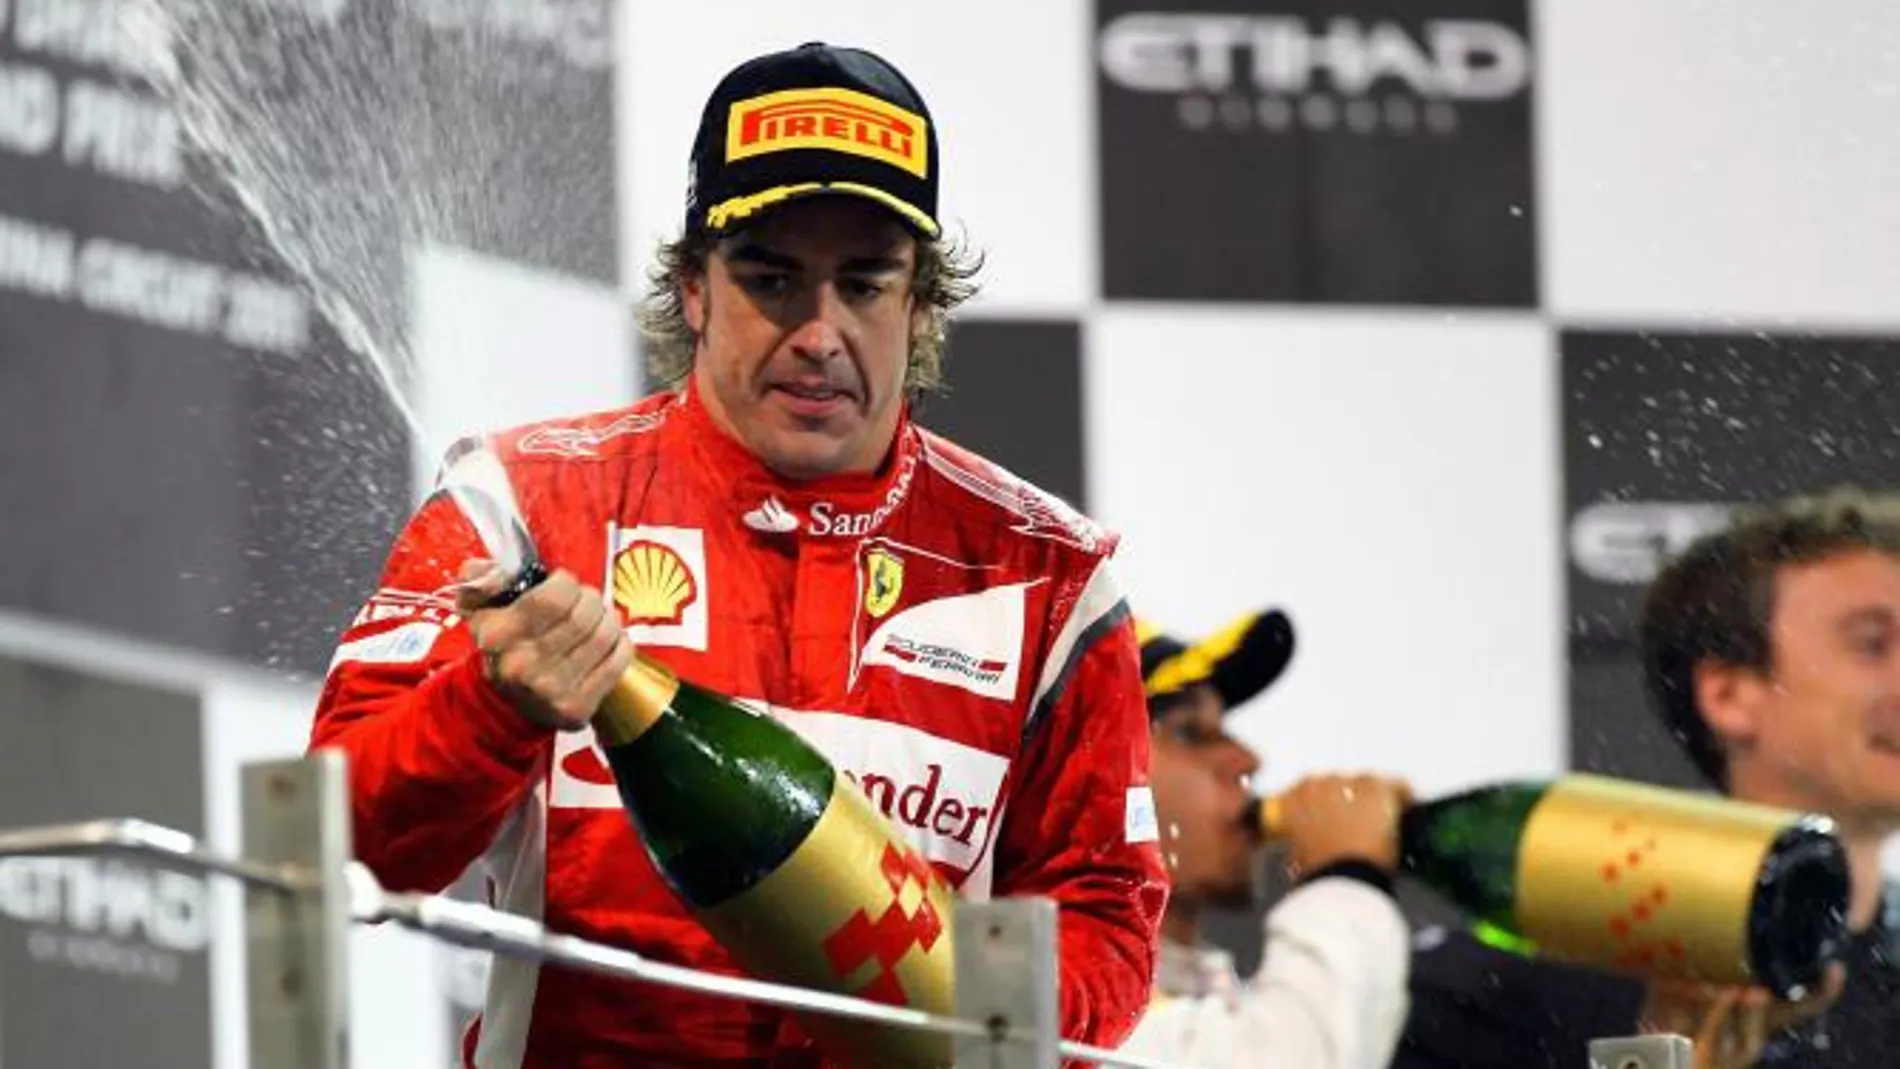 Alonso celebrando su segundo puesto